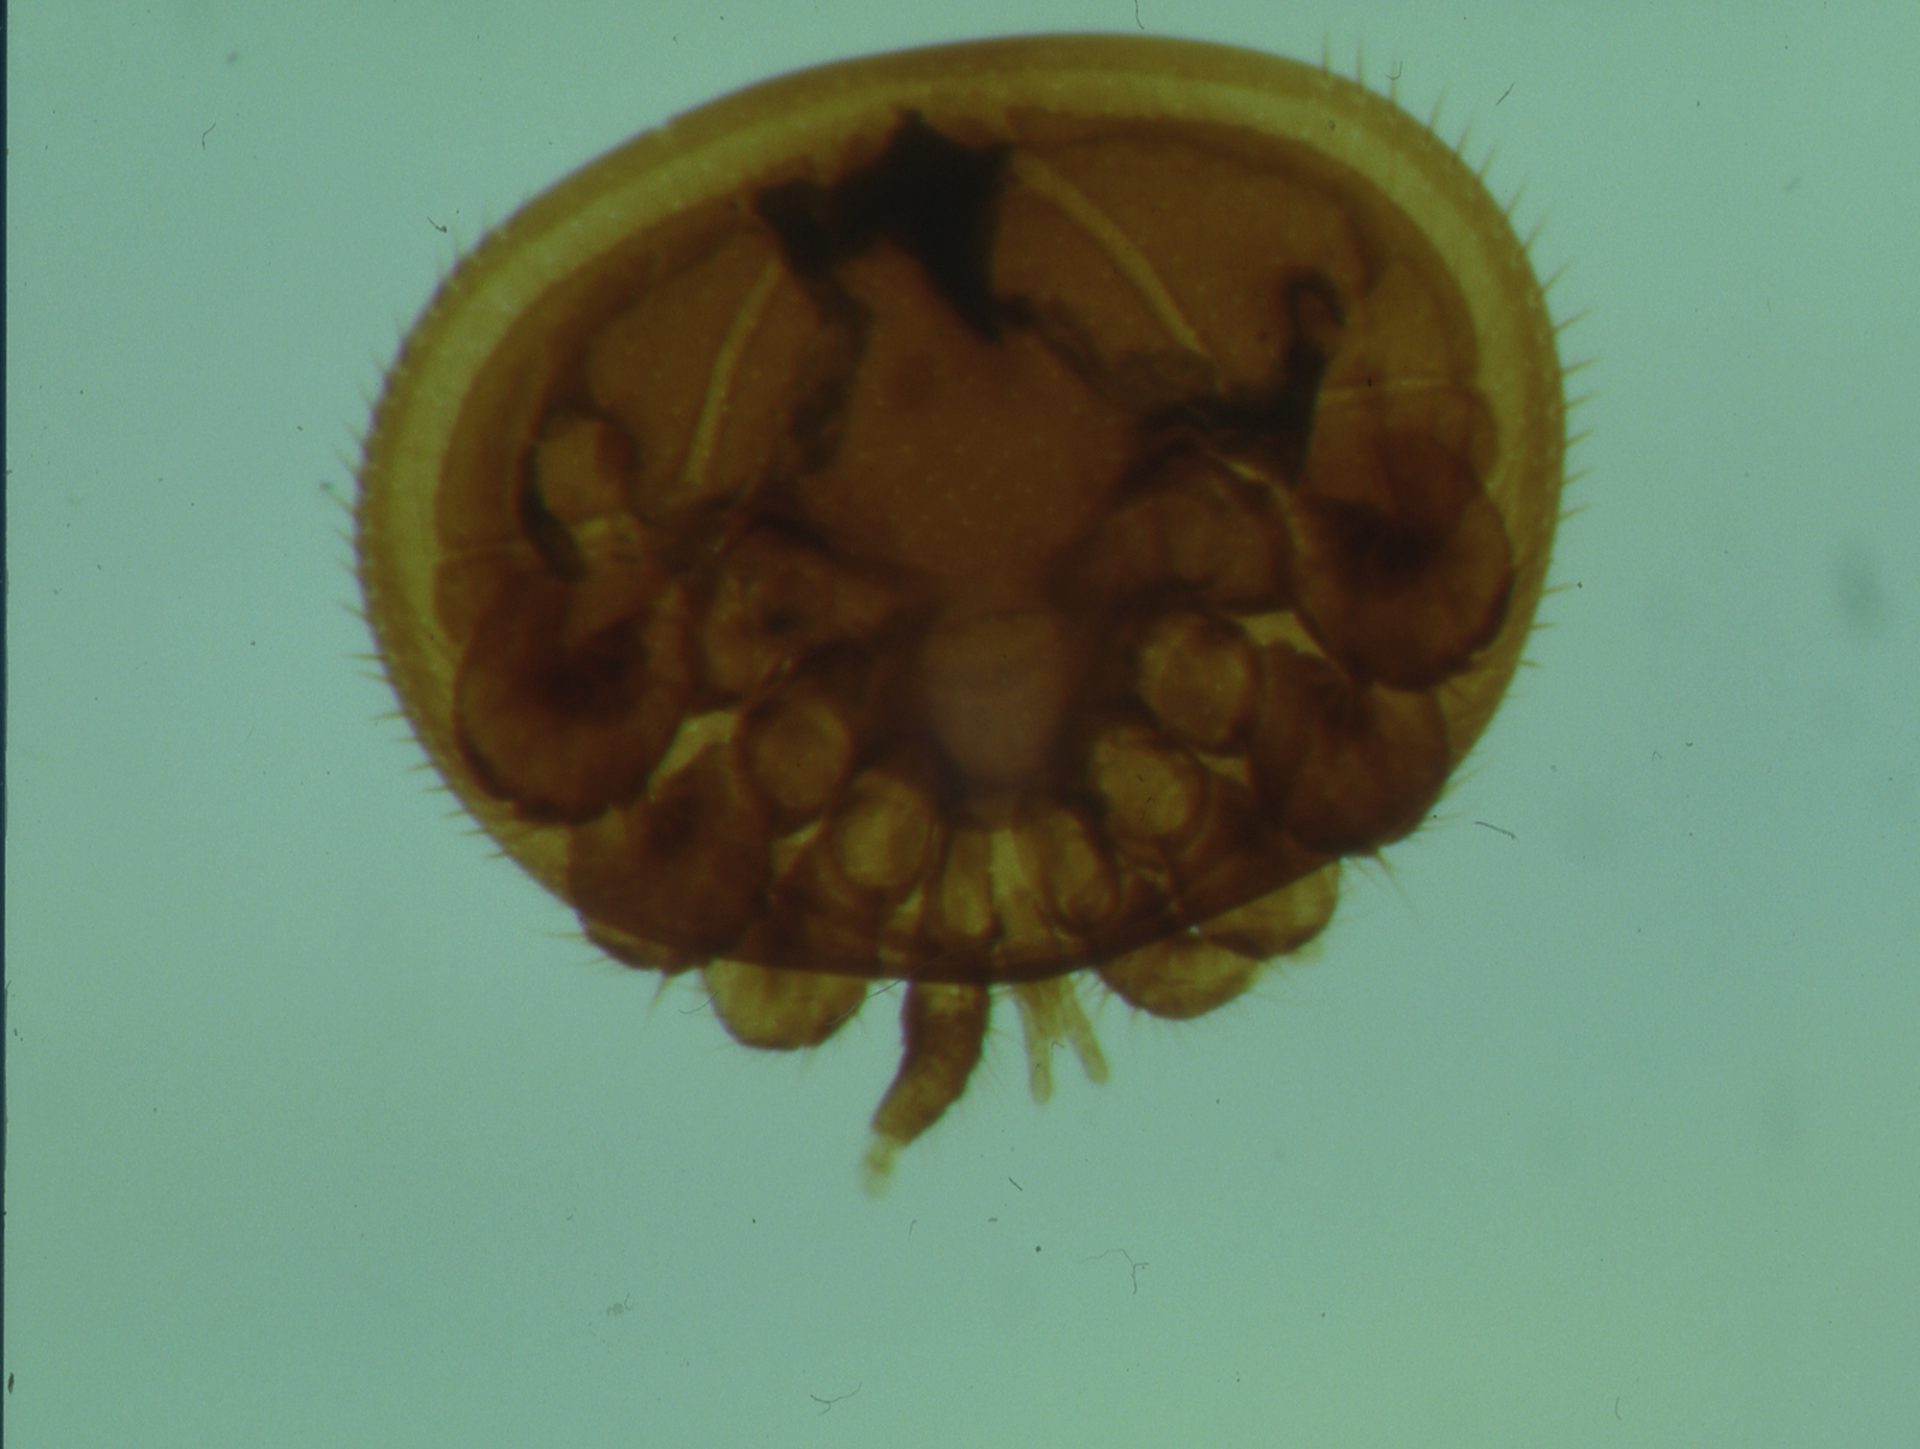 Varroa bee mite under the microscope